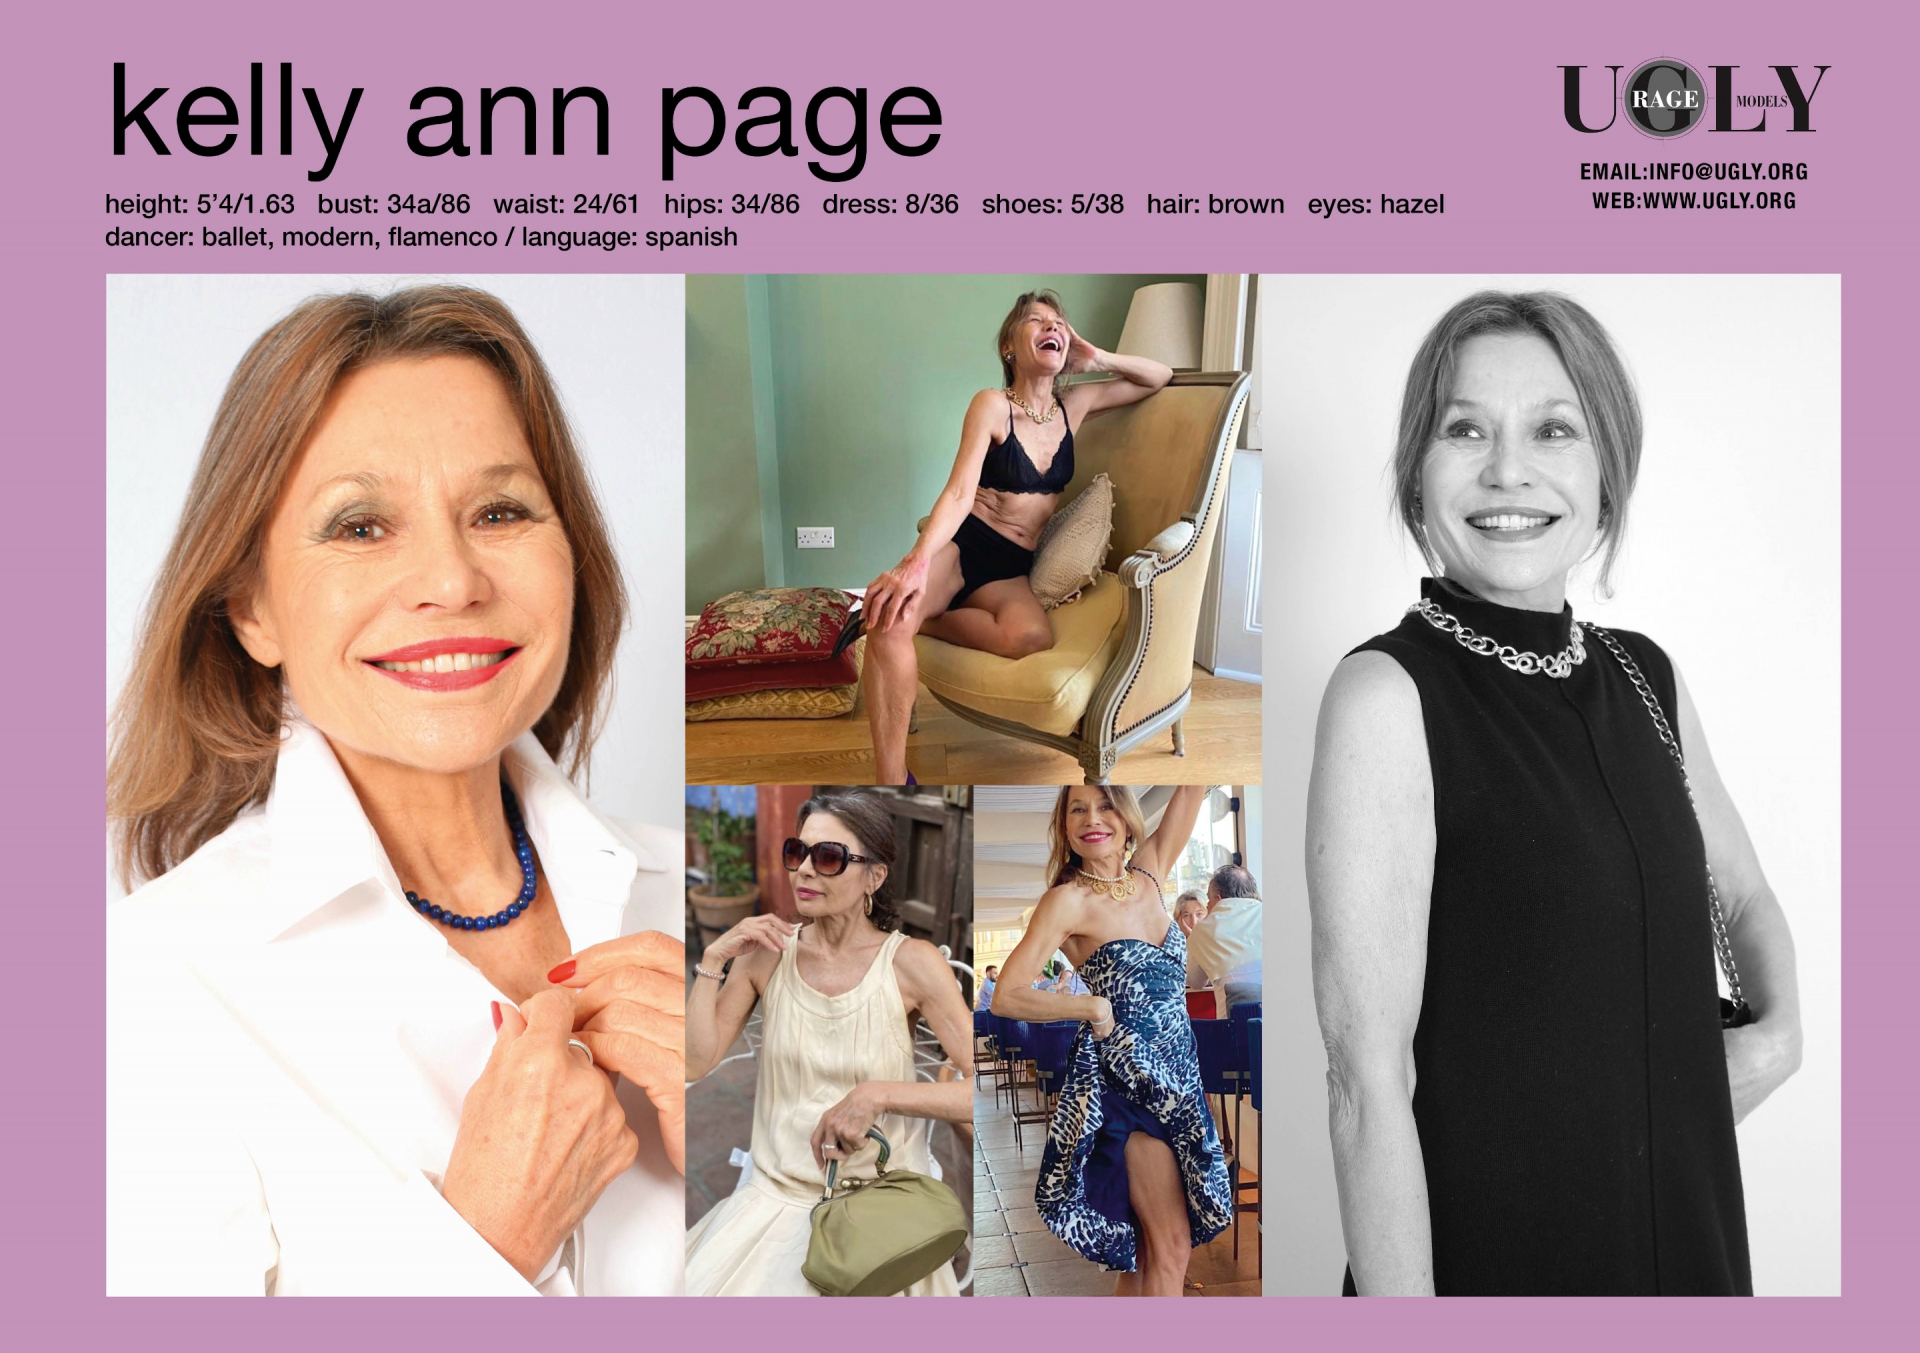 Ann page actress